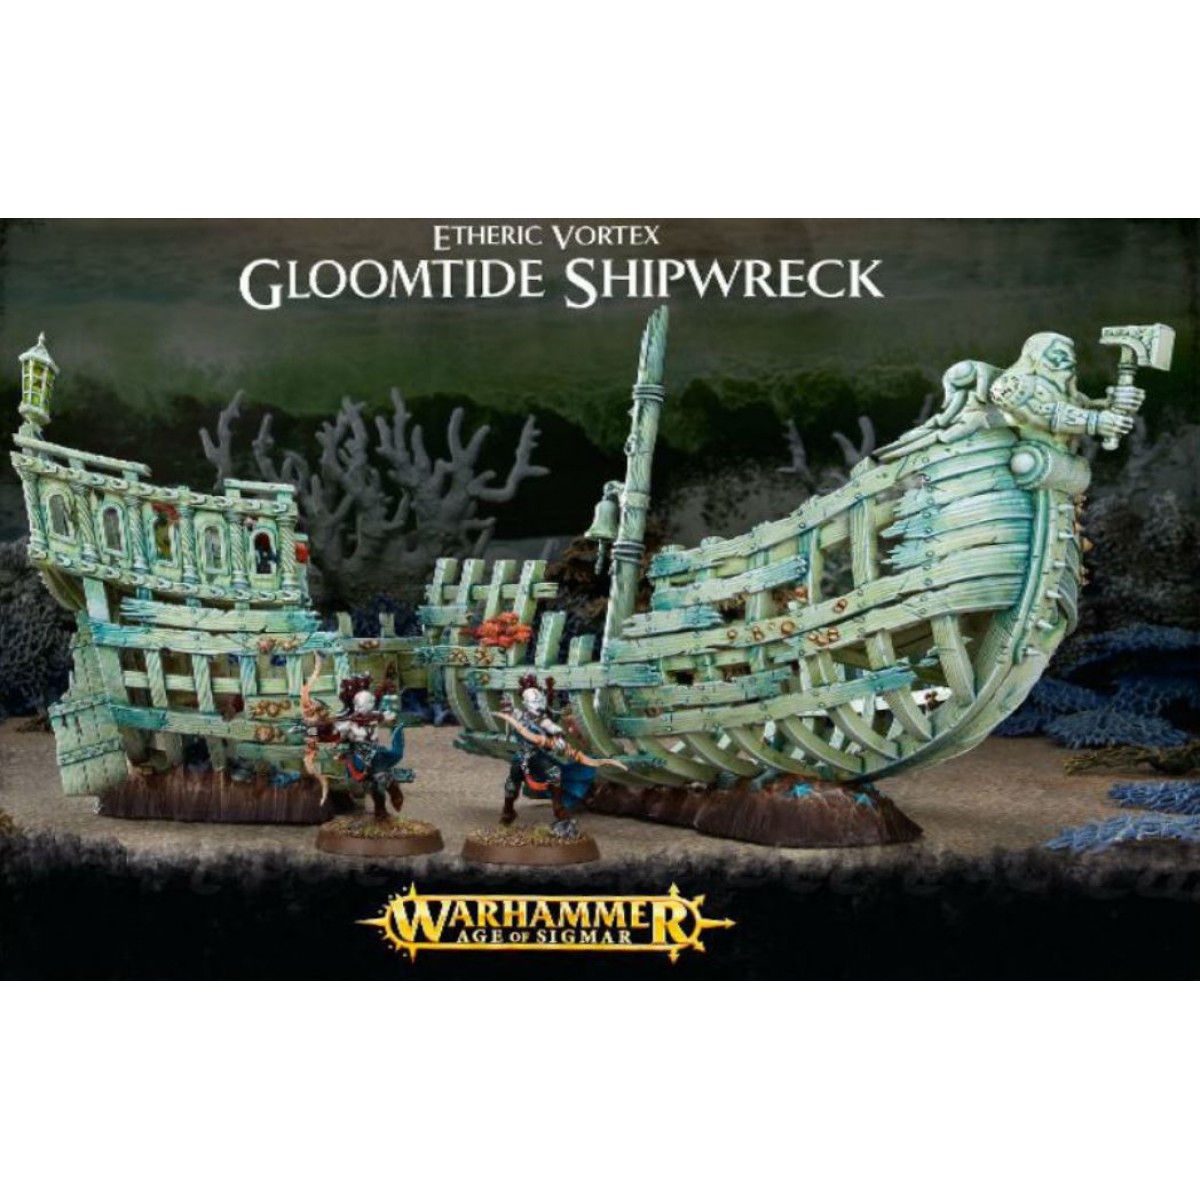 gw-aos-balewind-gloomtide-shipwreck-1200x1200.jpg